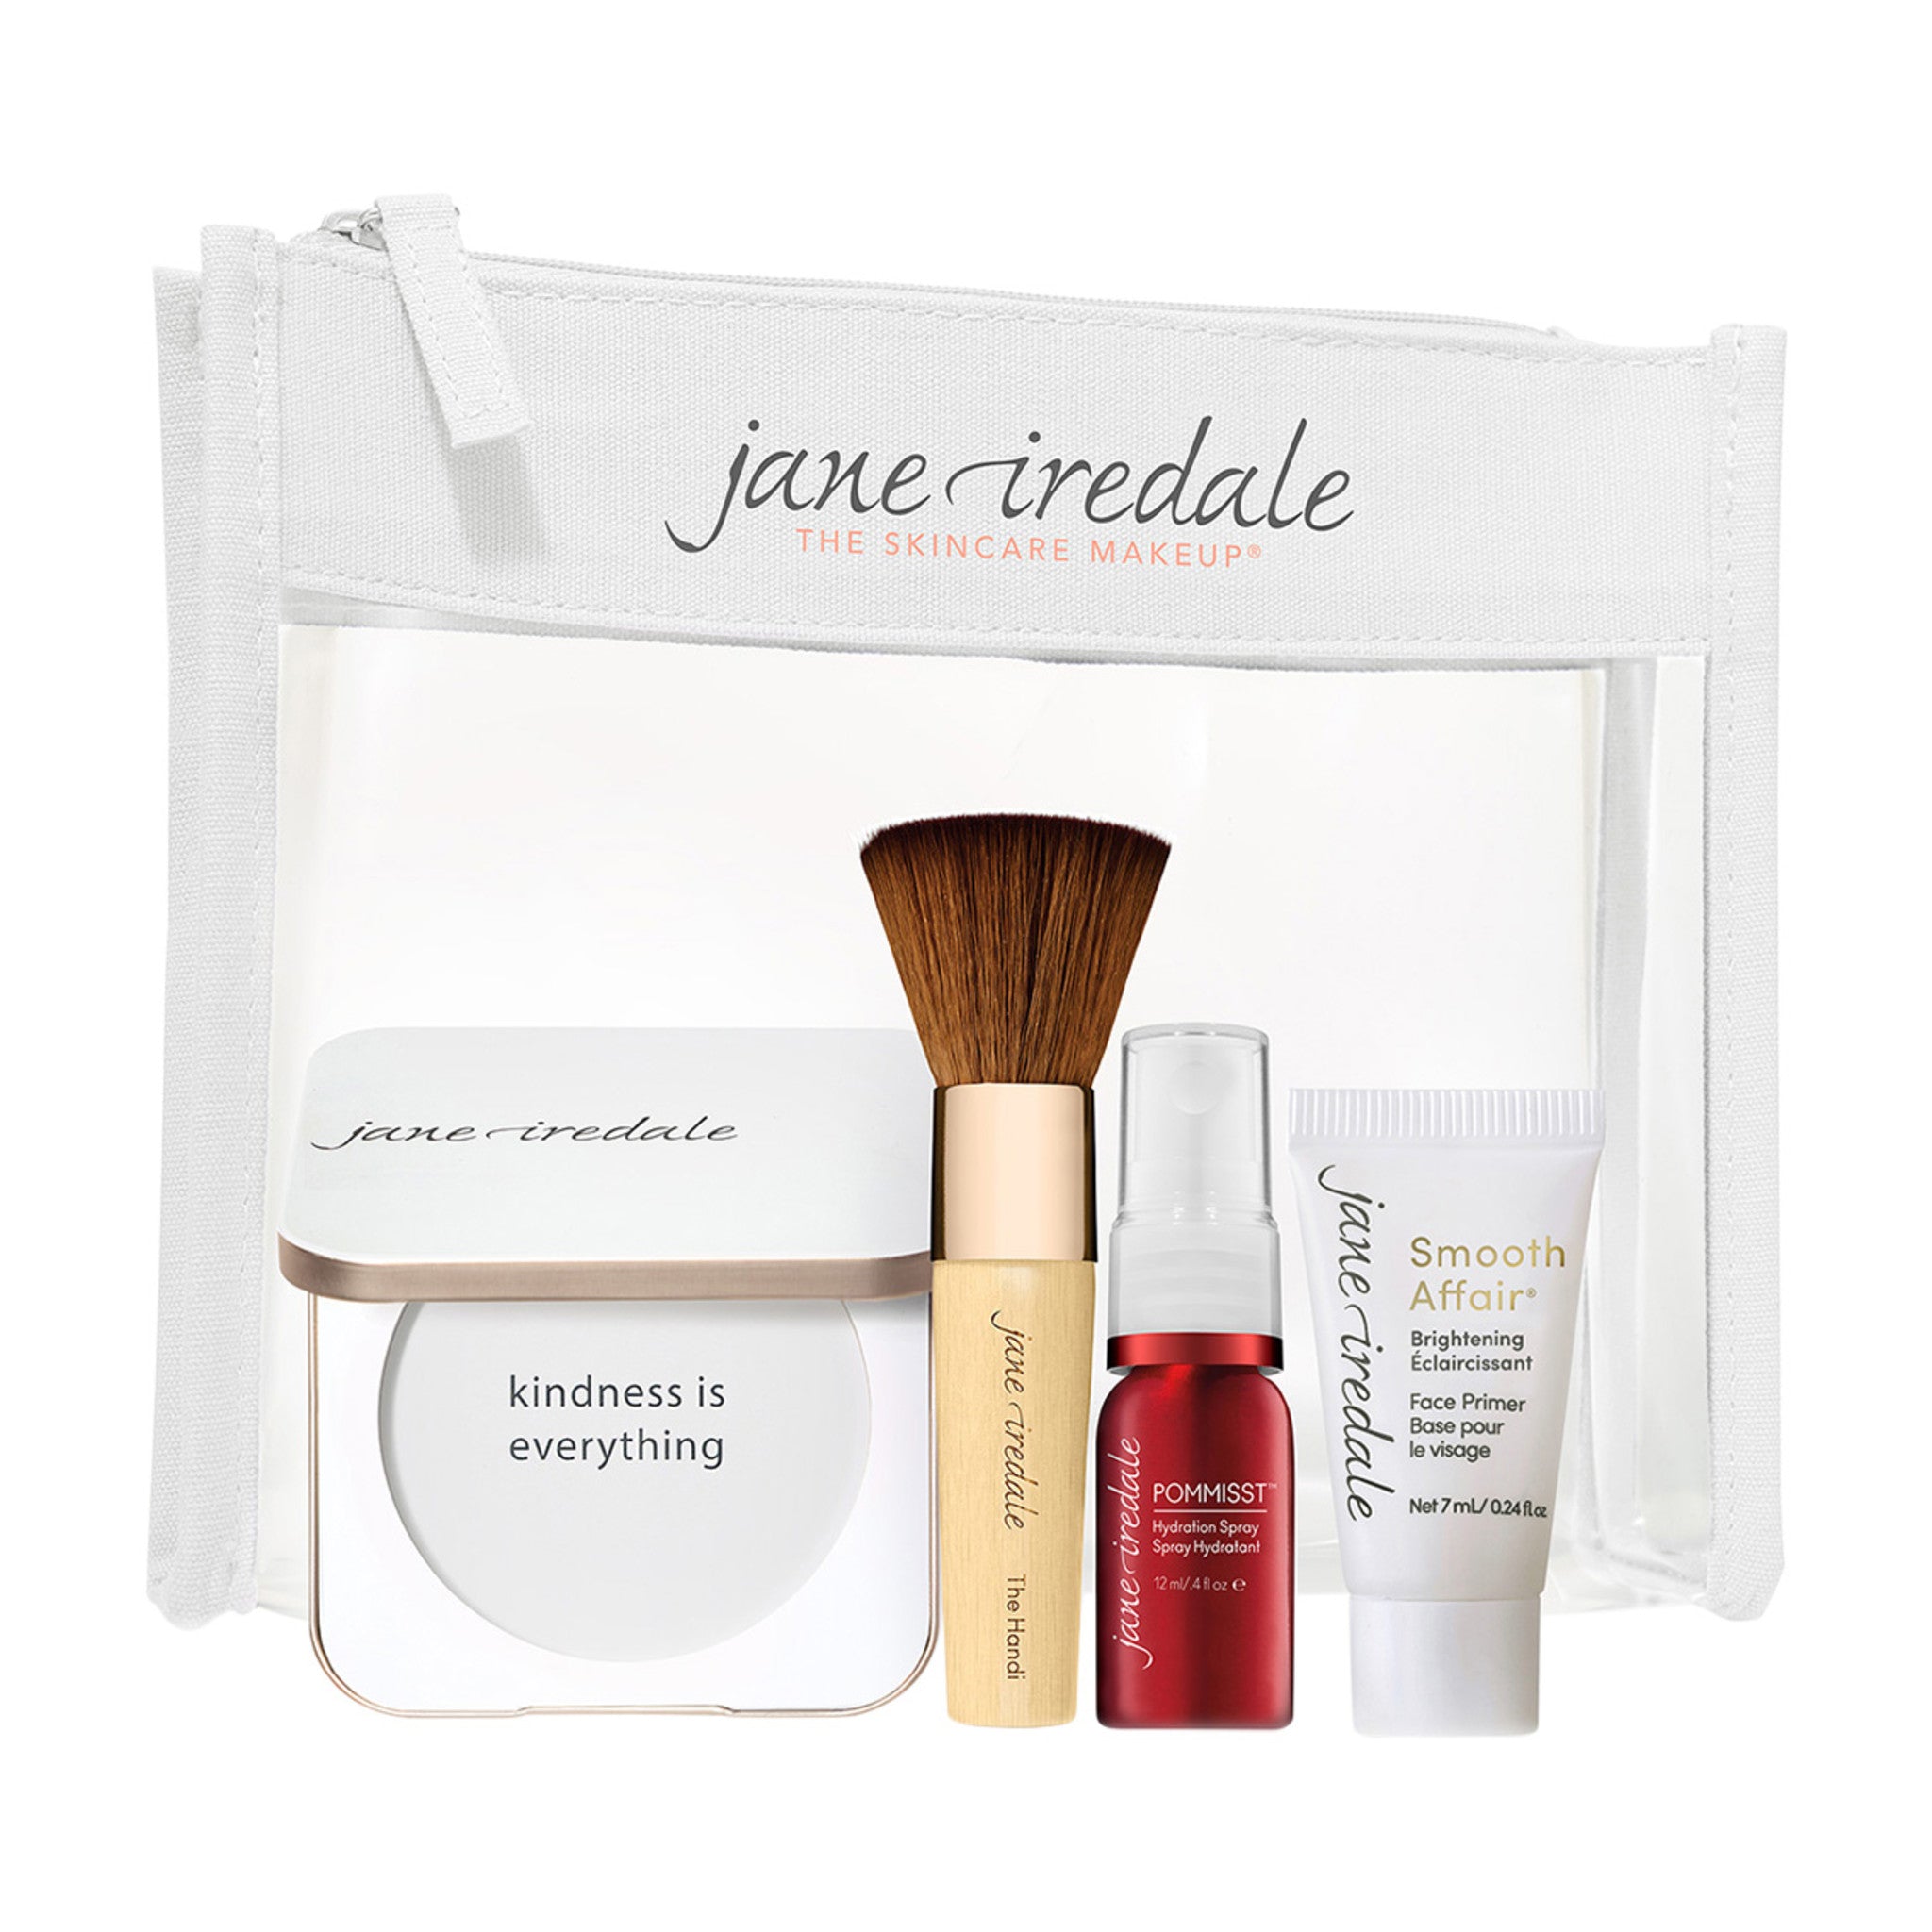 Jane Iredale The Skincare Makeup System Essentials Set bluemercury